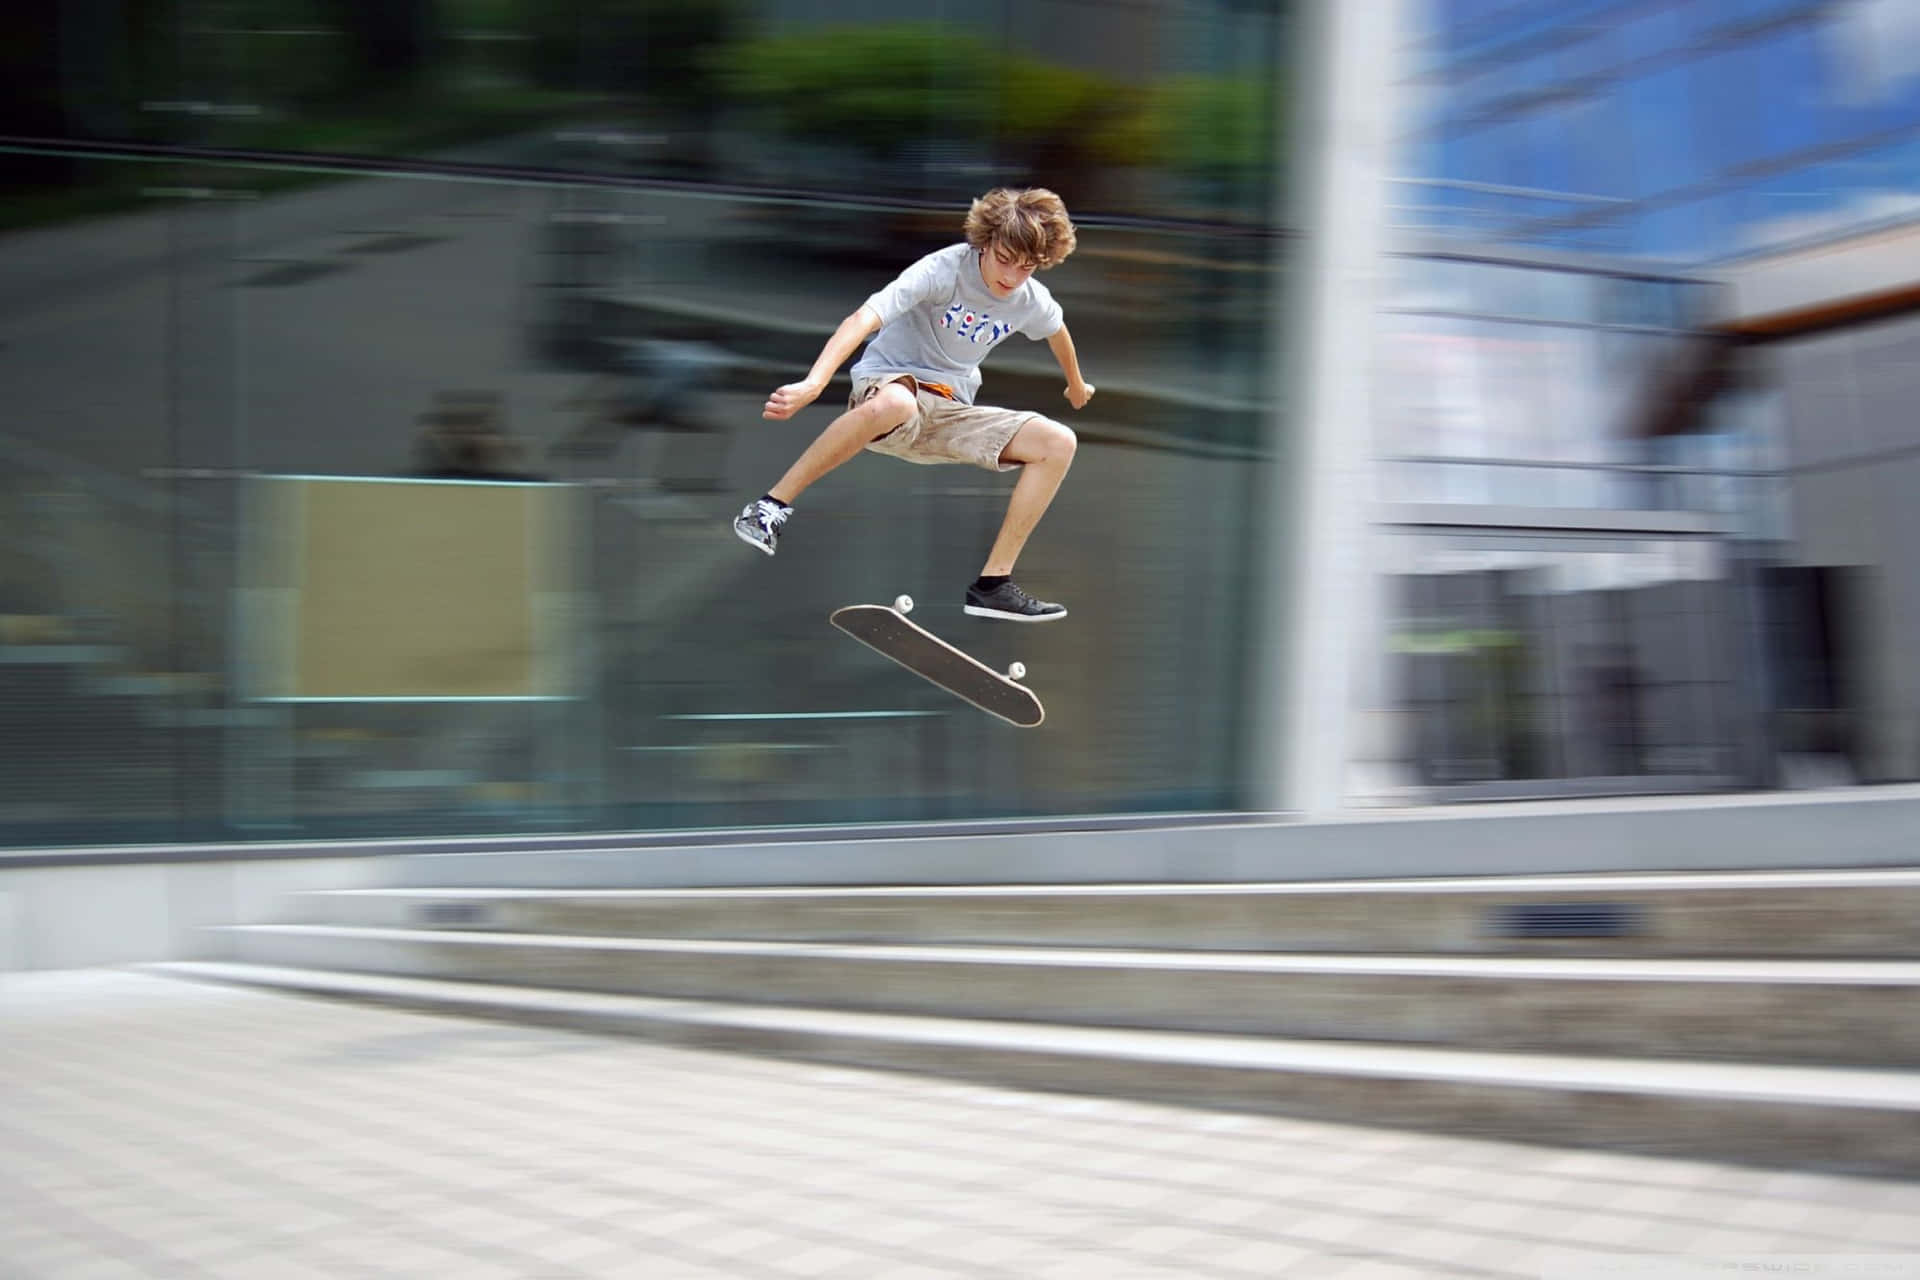 A Boy Is Doing A Skateboard Trick